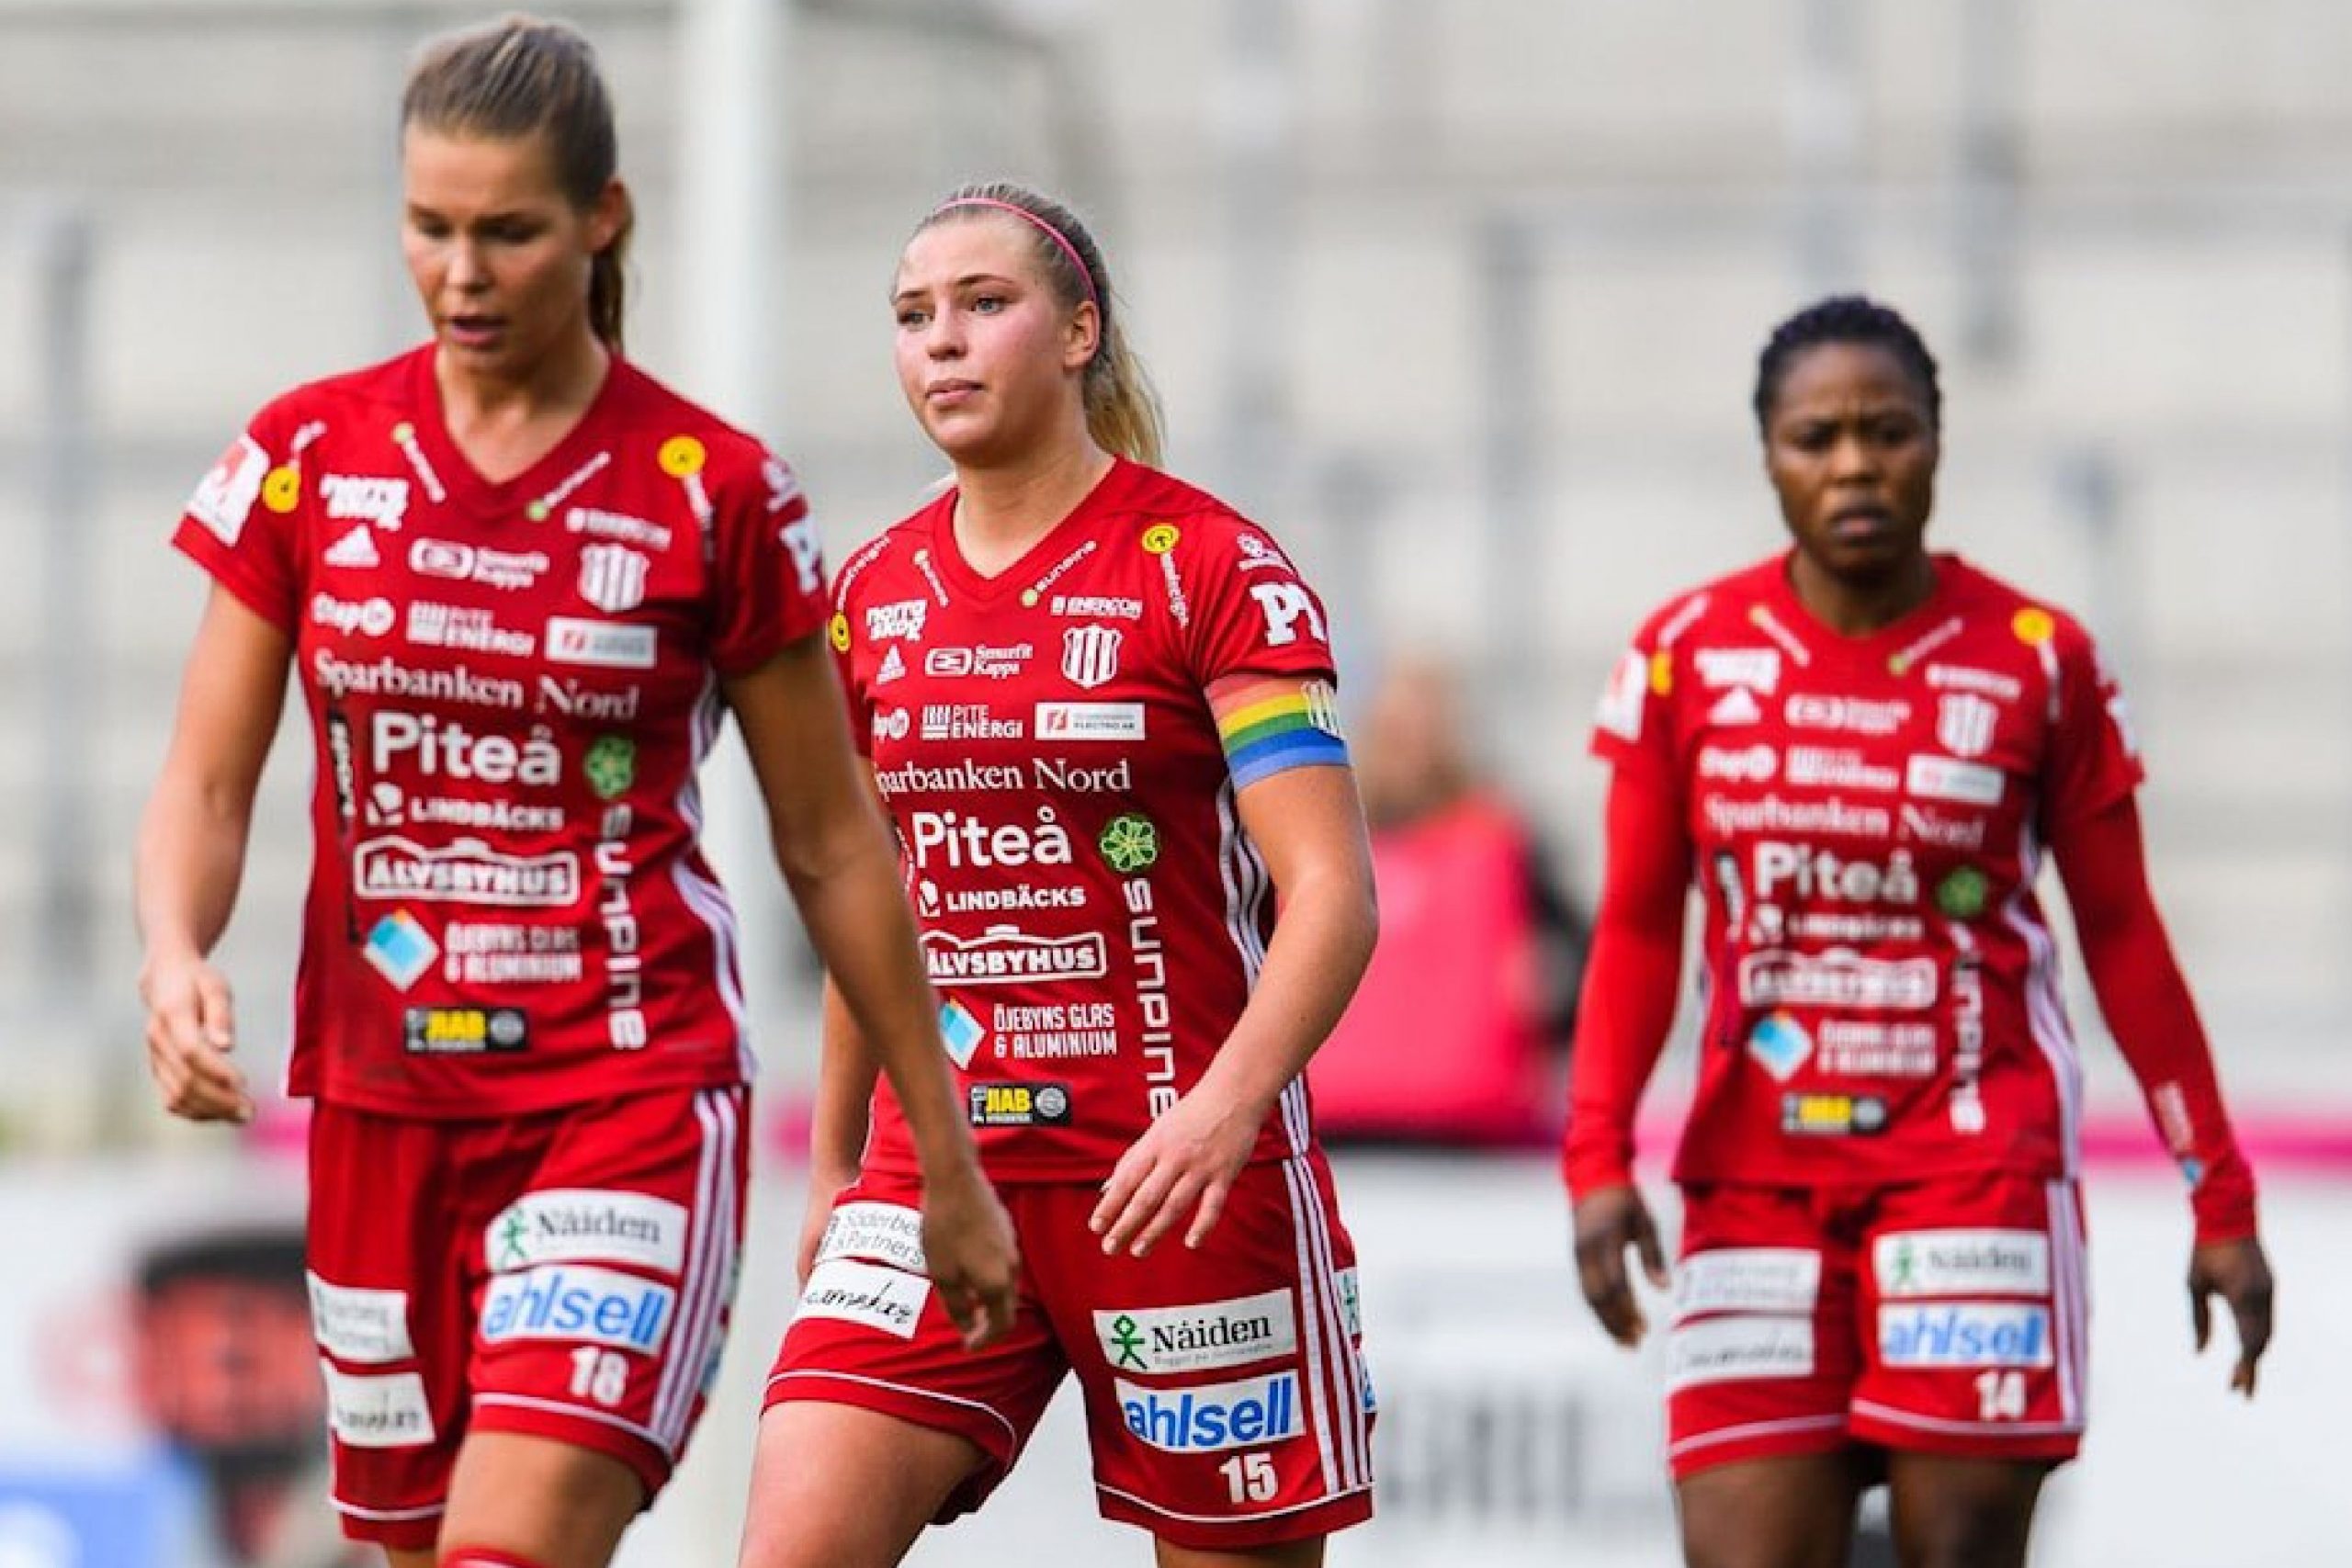 The women’s team going viral for the sheer number of sponsor logos on their kit